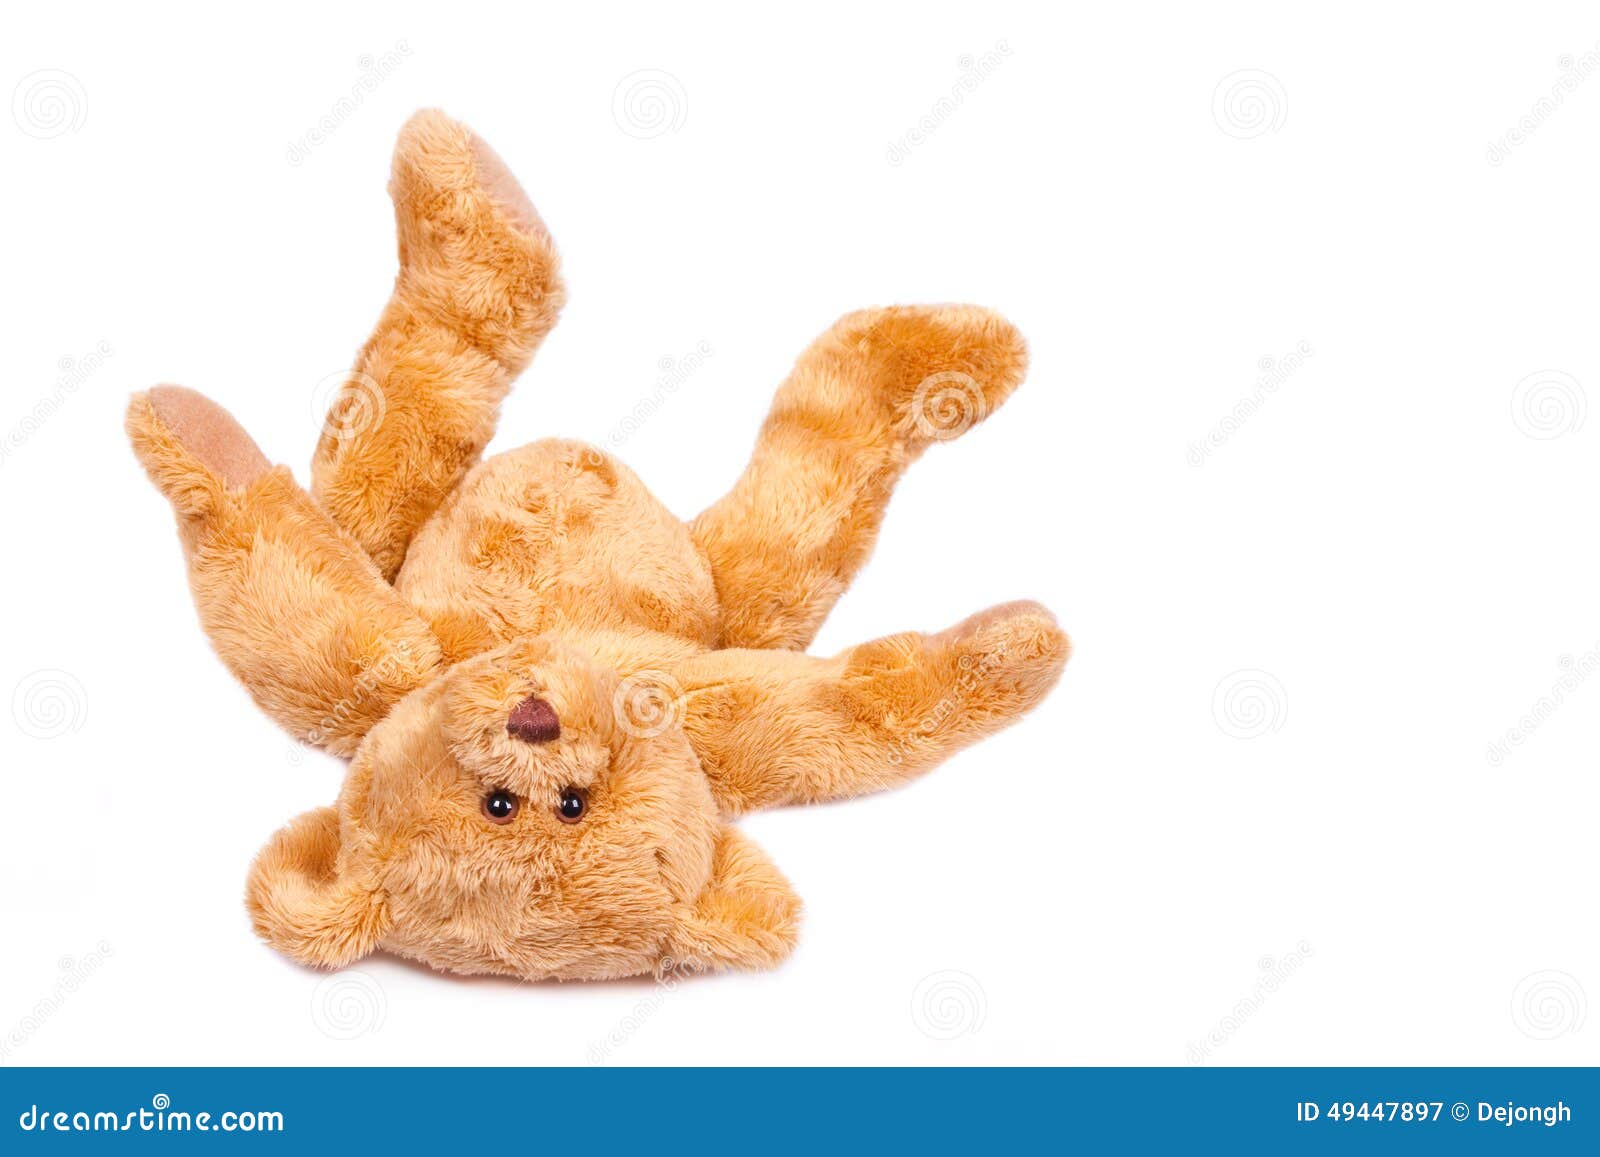 Teddy bear, upside down stock image. Image of playful - 49447897